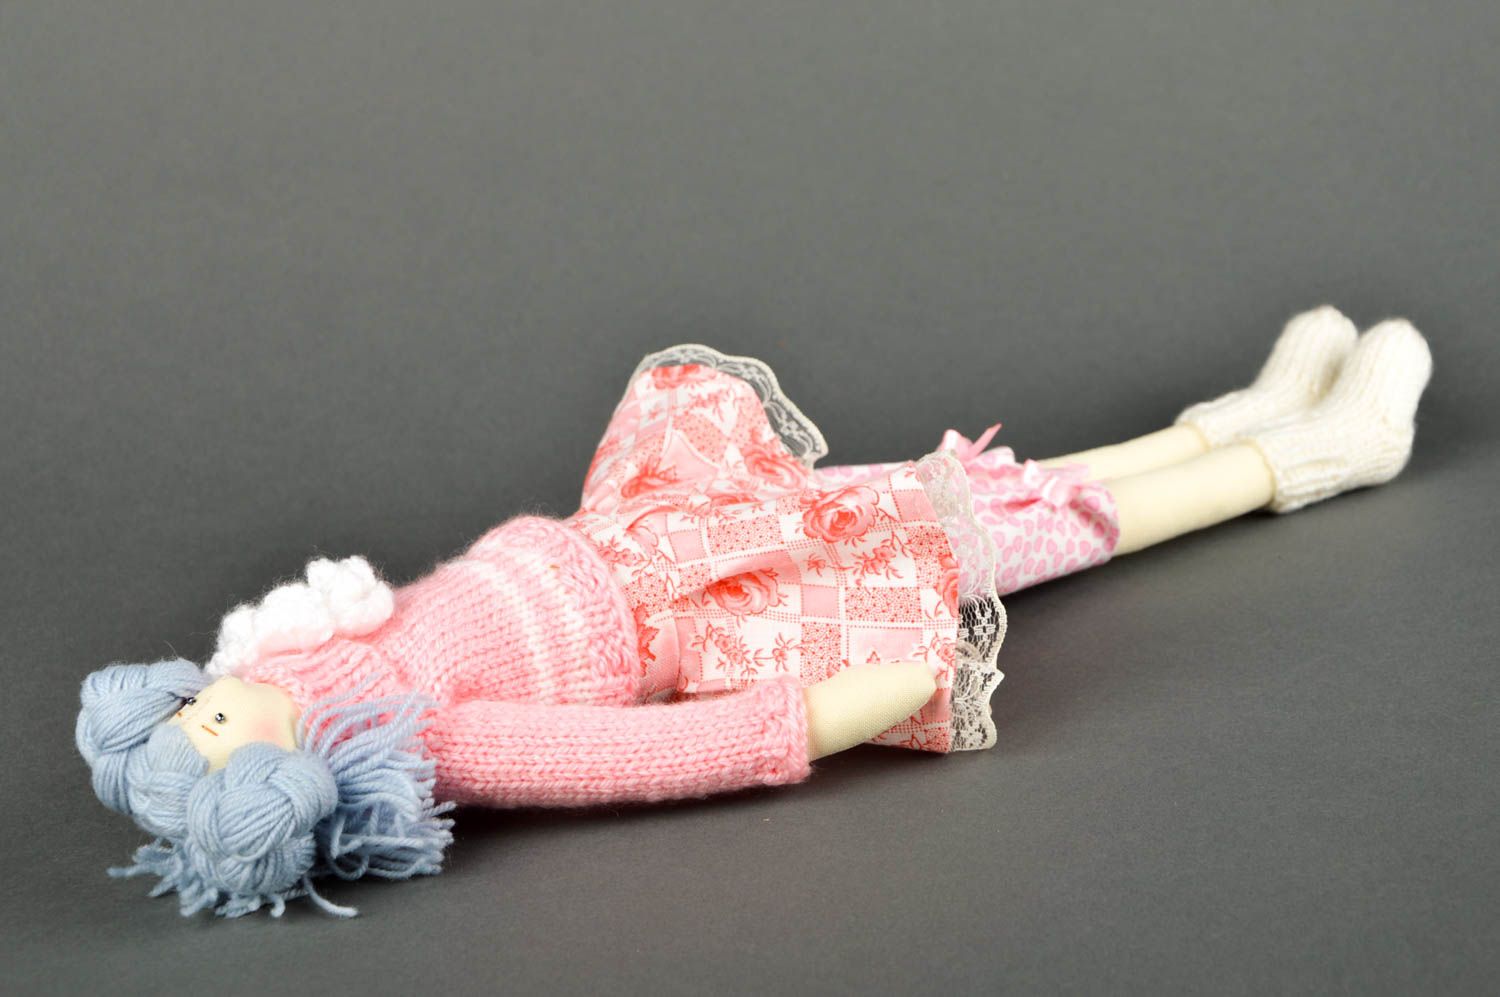 Rag doll handmade fabric toy textile toy for children nursery decor ideas photo 3